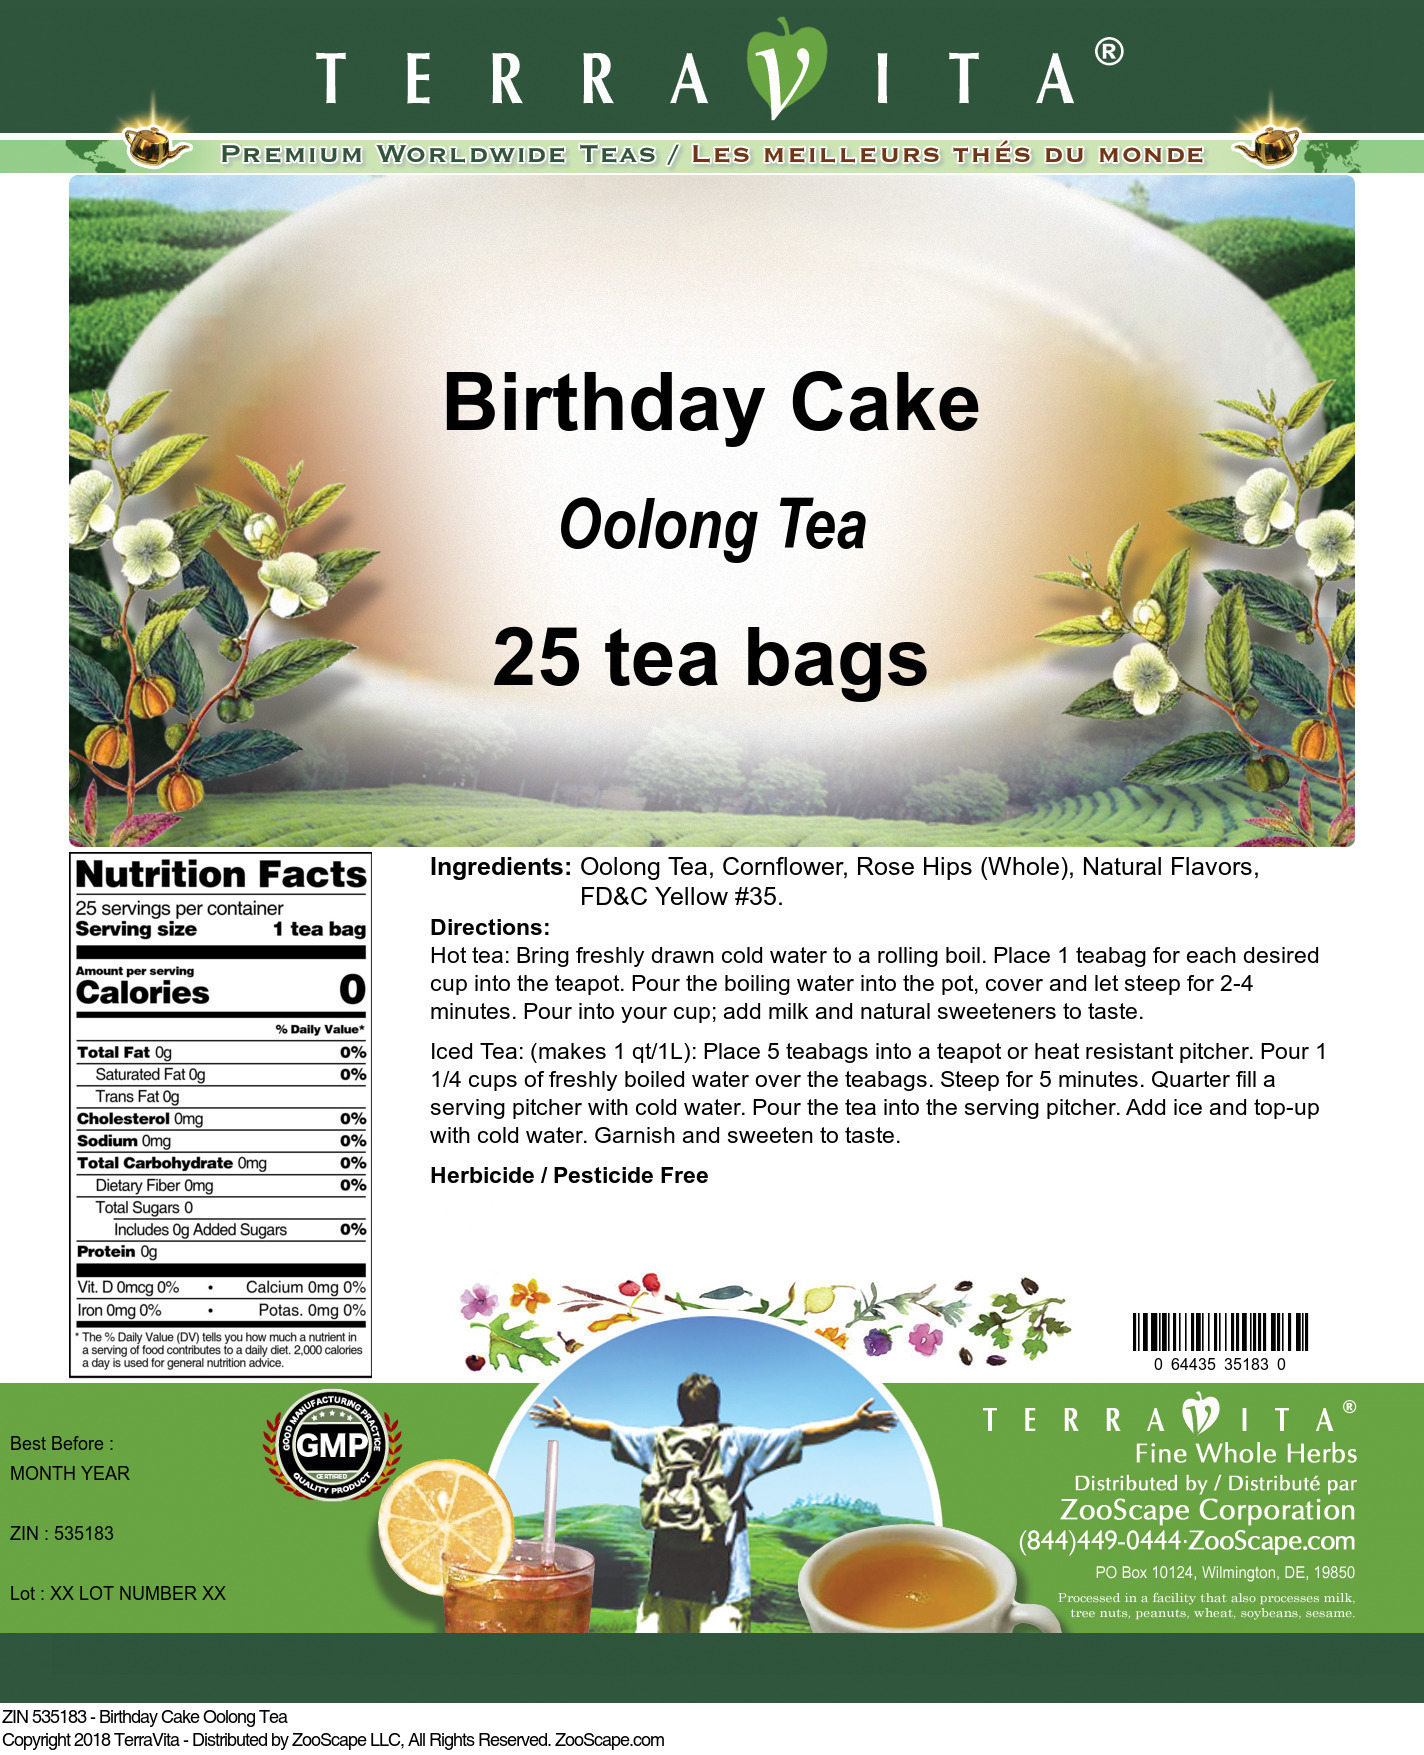 Birthday Cake Oolong Tea - Label